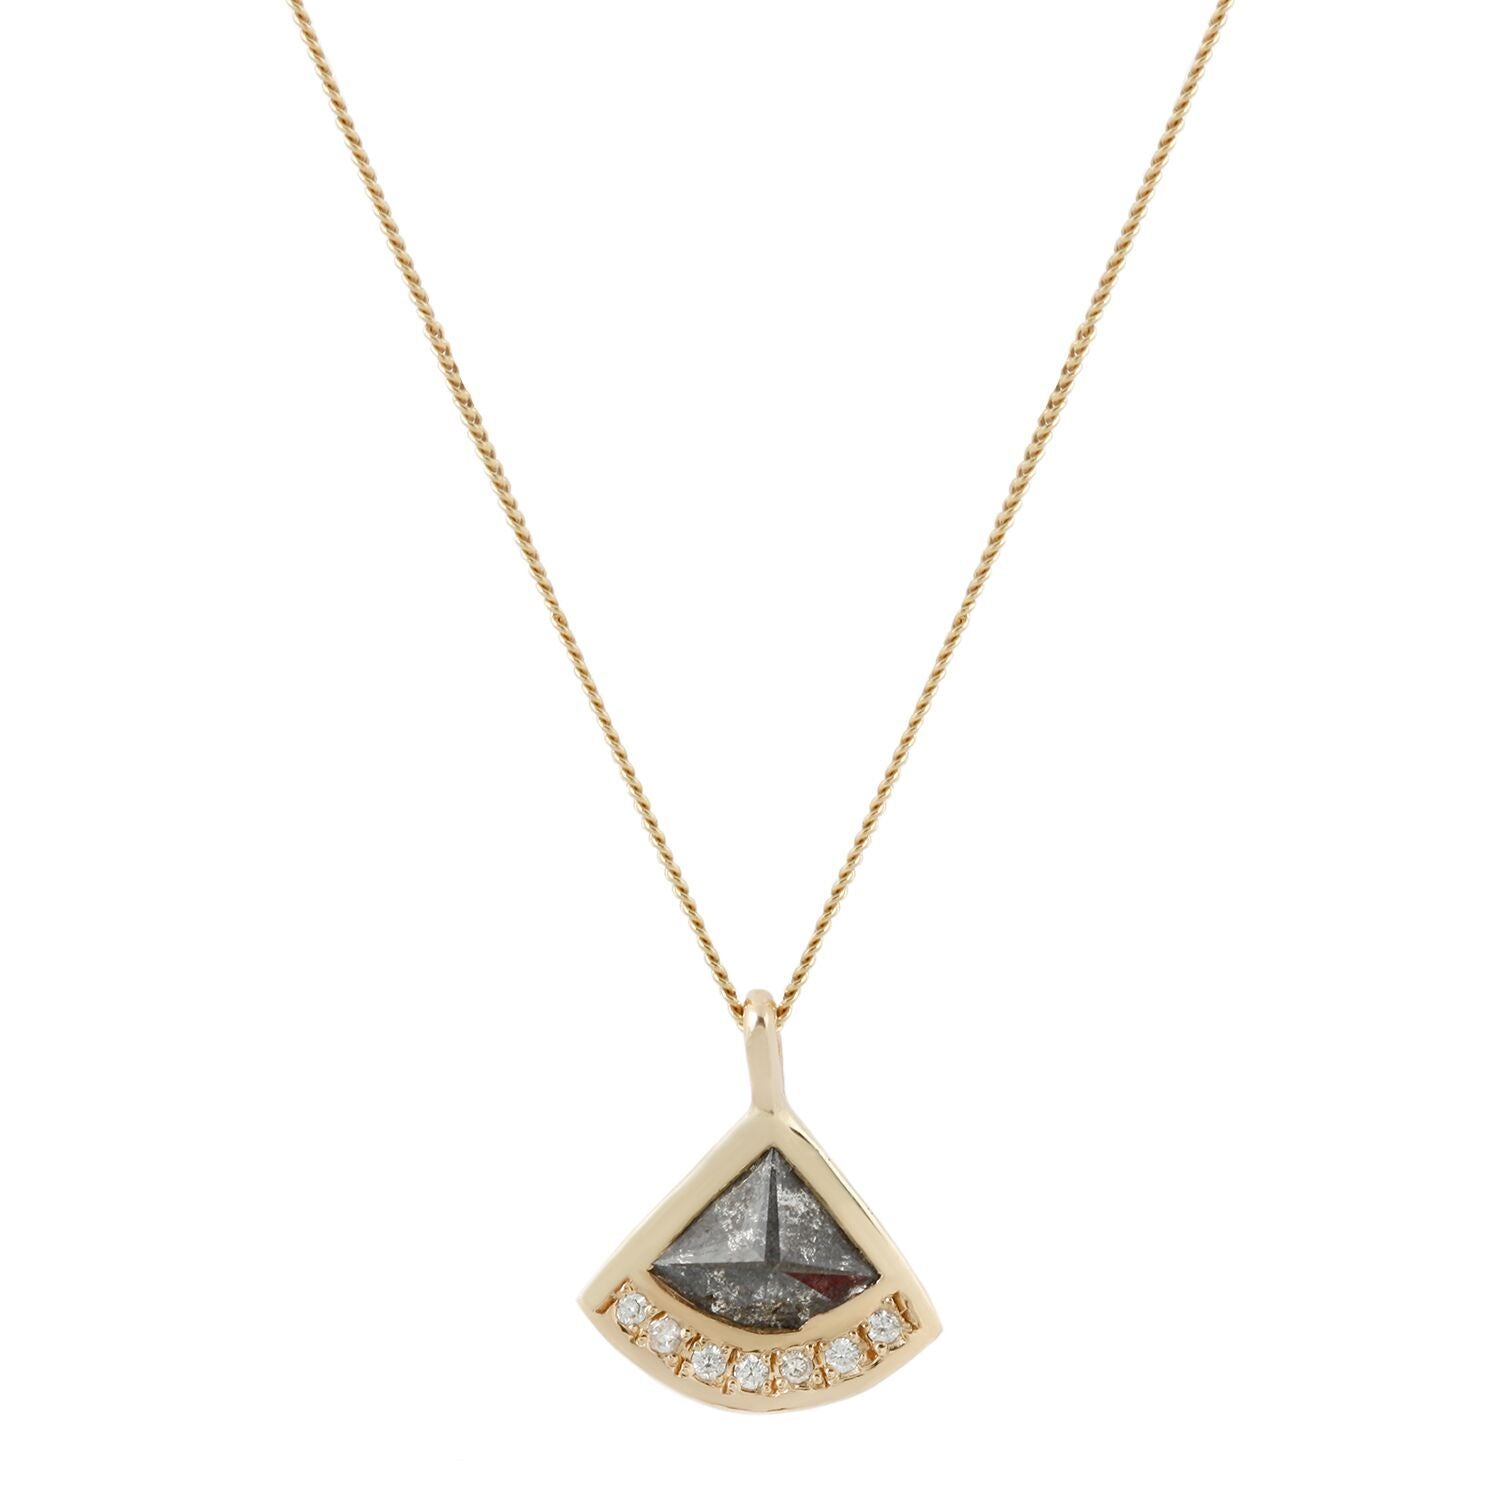 Adeline Slice Necklace with diamonds